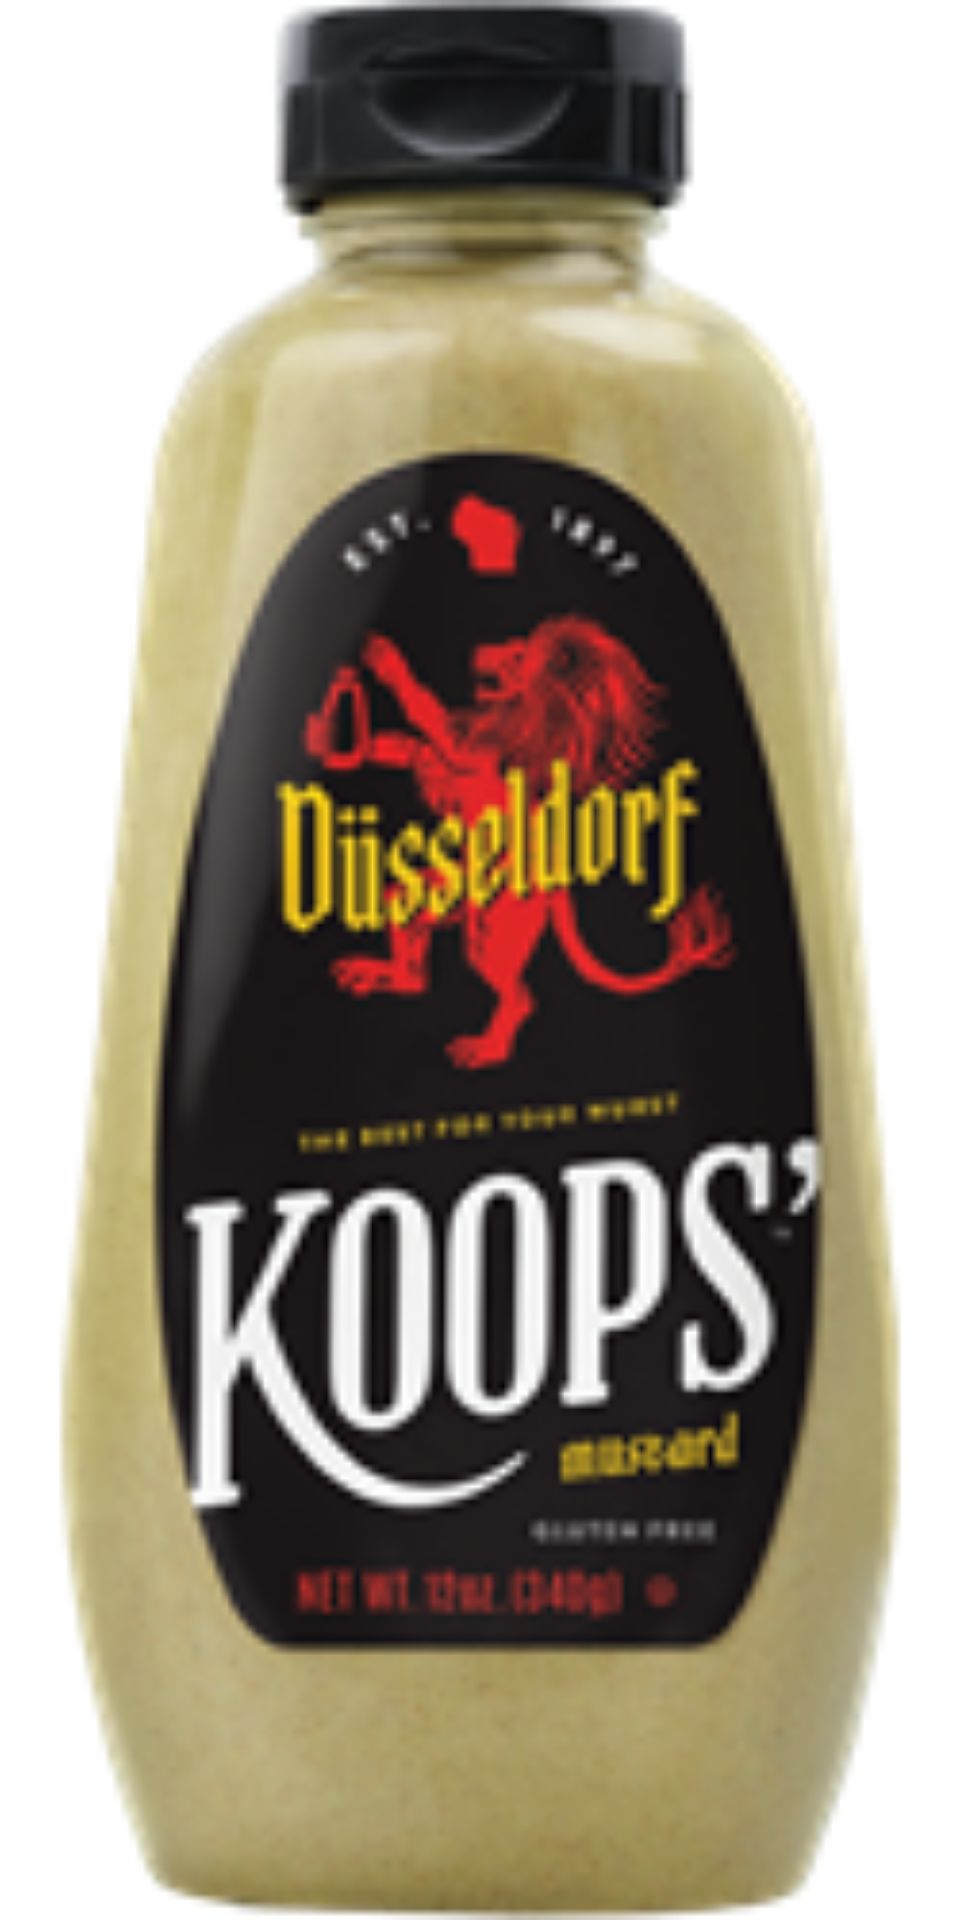 Koops' Dusseldorf Mustard